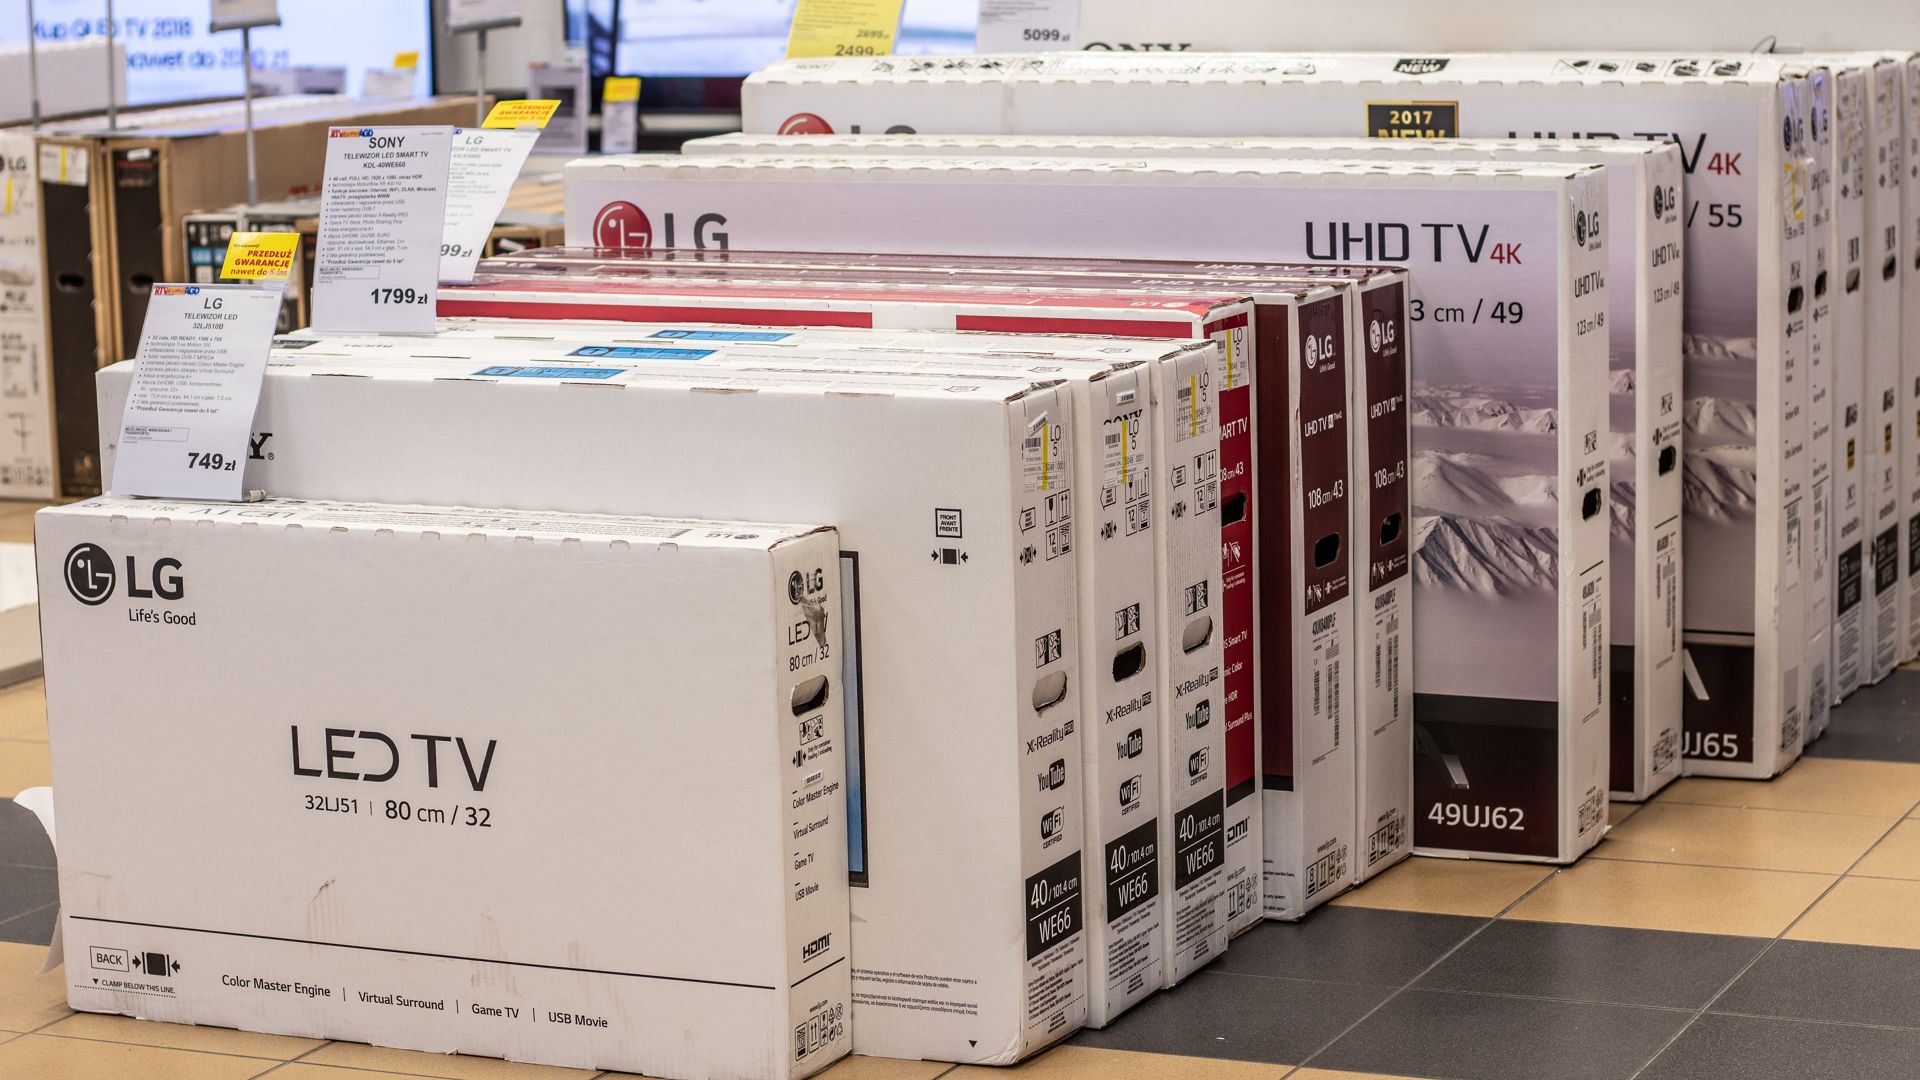 Pile of Bigscreen TV boxes